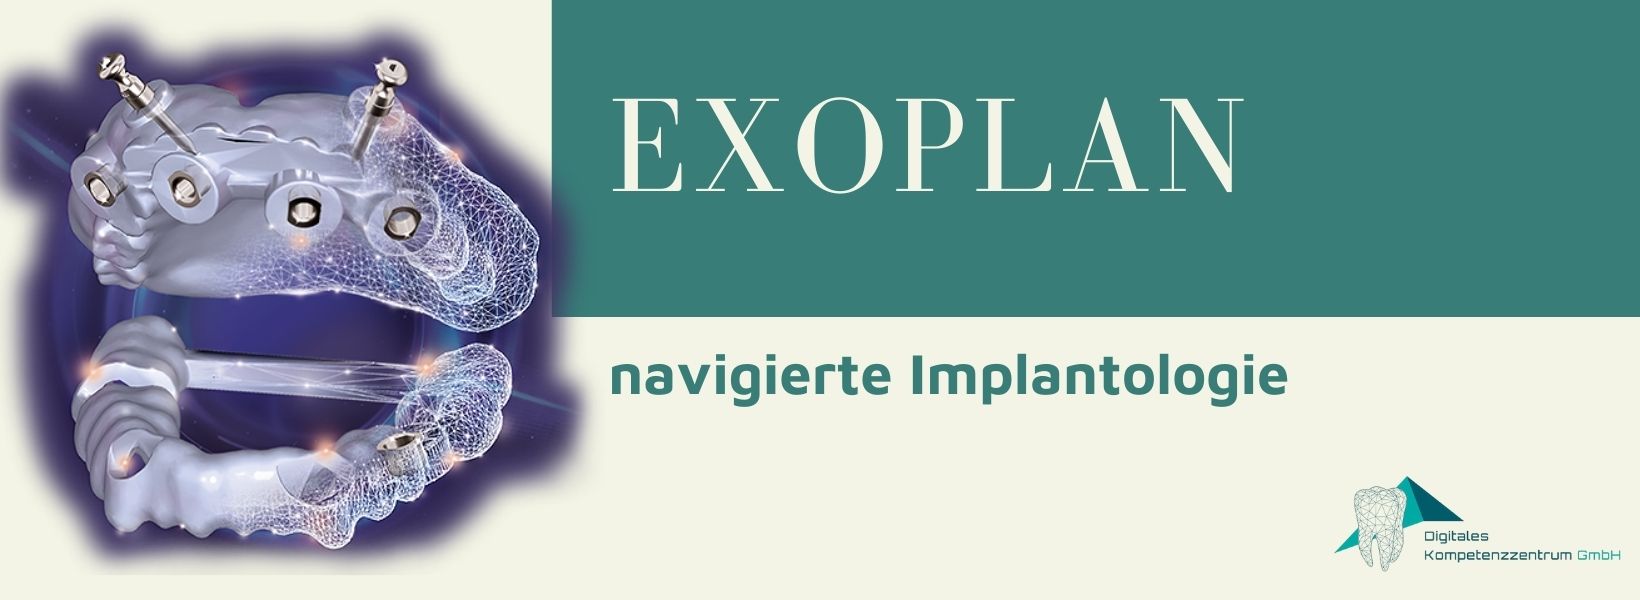 exoplan – navigierte Implantologie